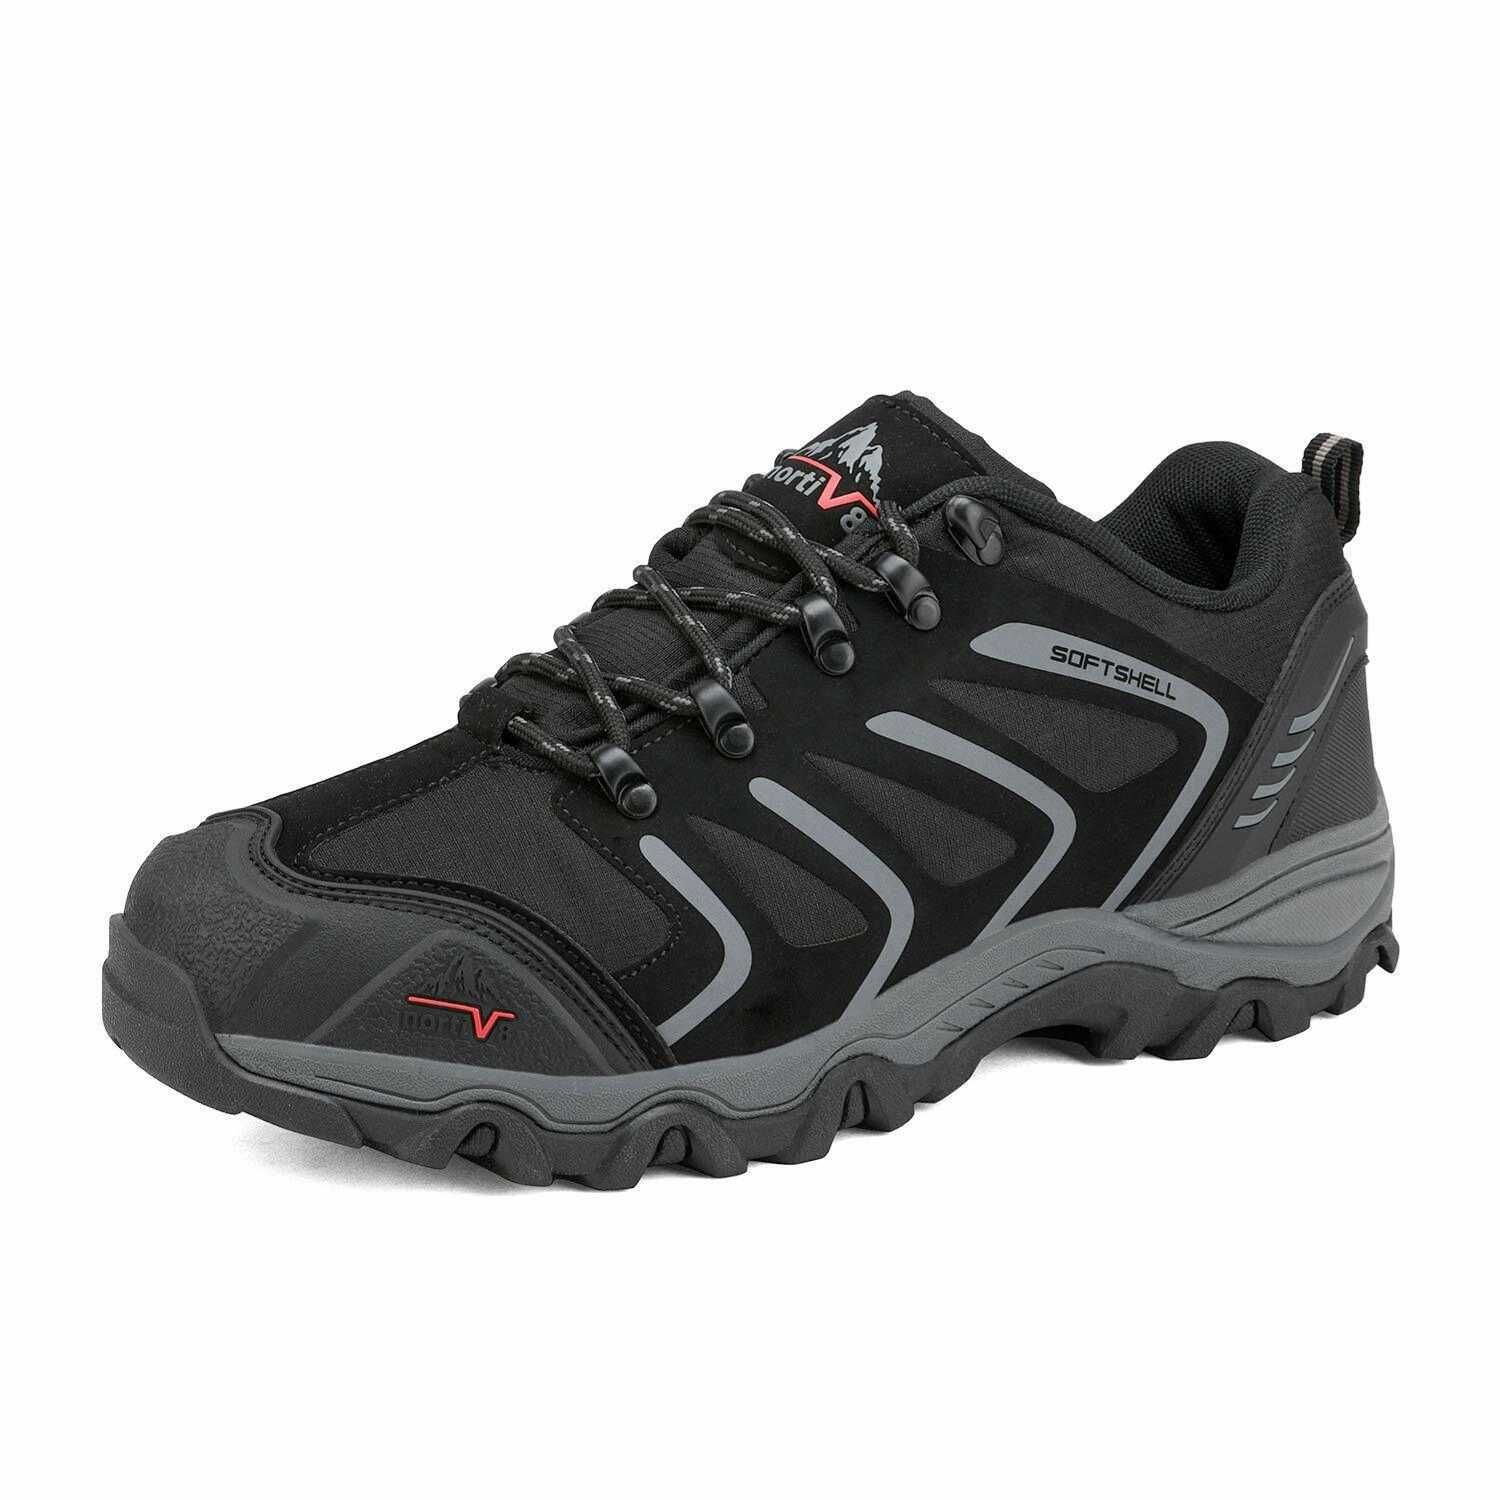 Nortiv 8 Men's Waterproof Mid Hiking Shoes (USA) трекинговые кроссовки